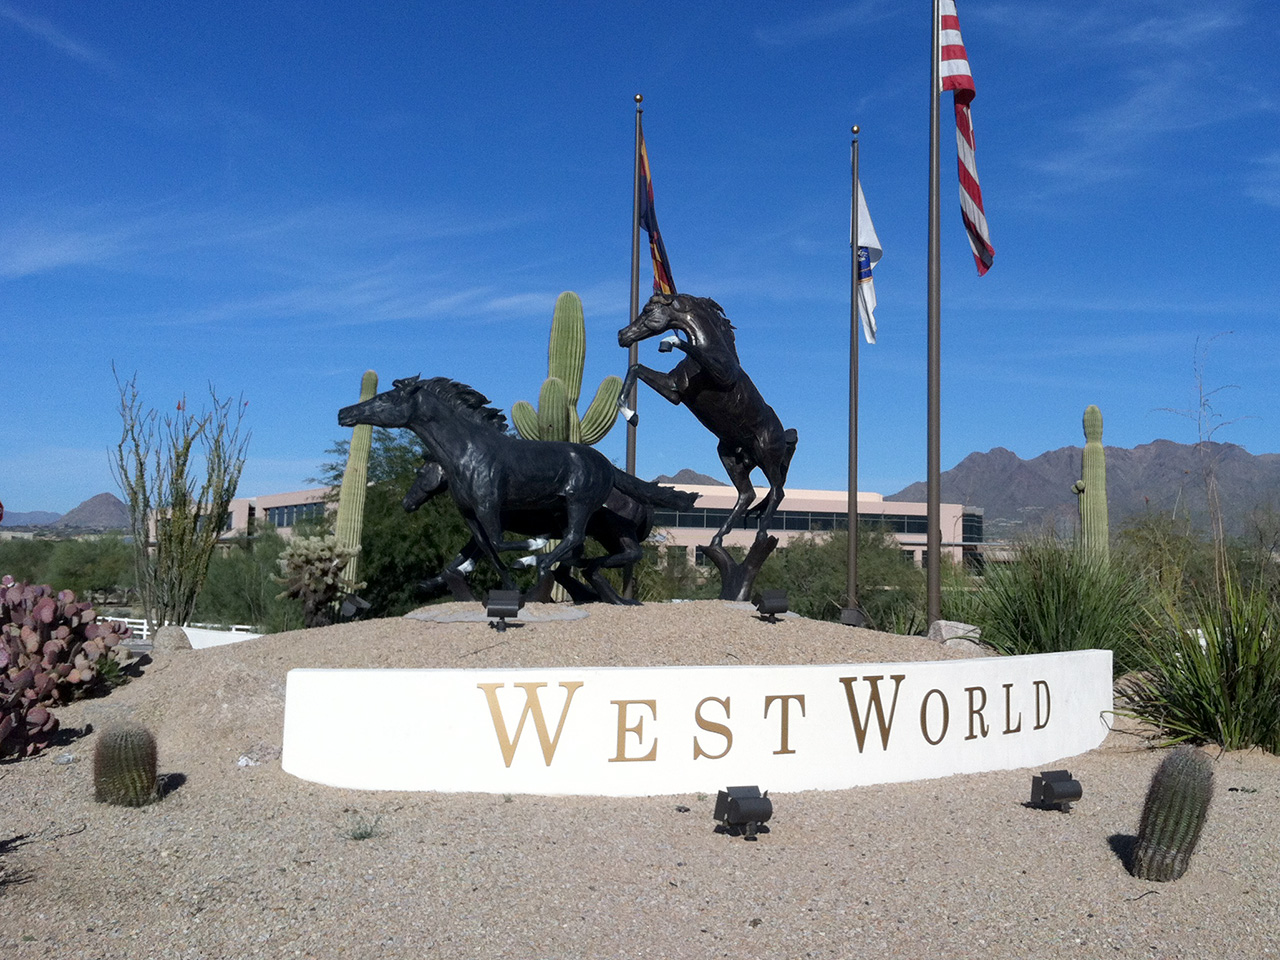 horse world above west world sign